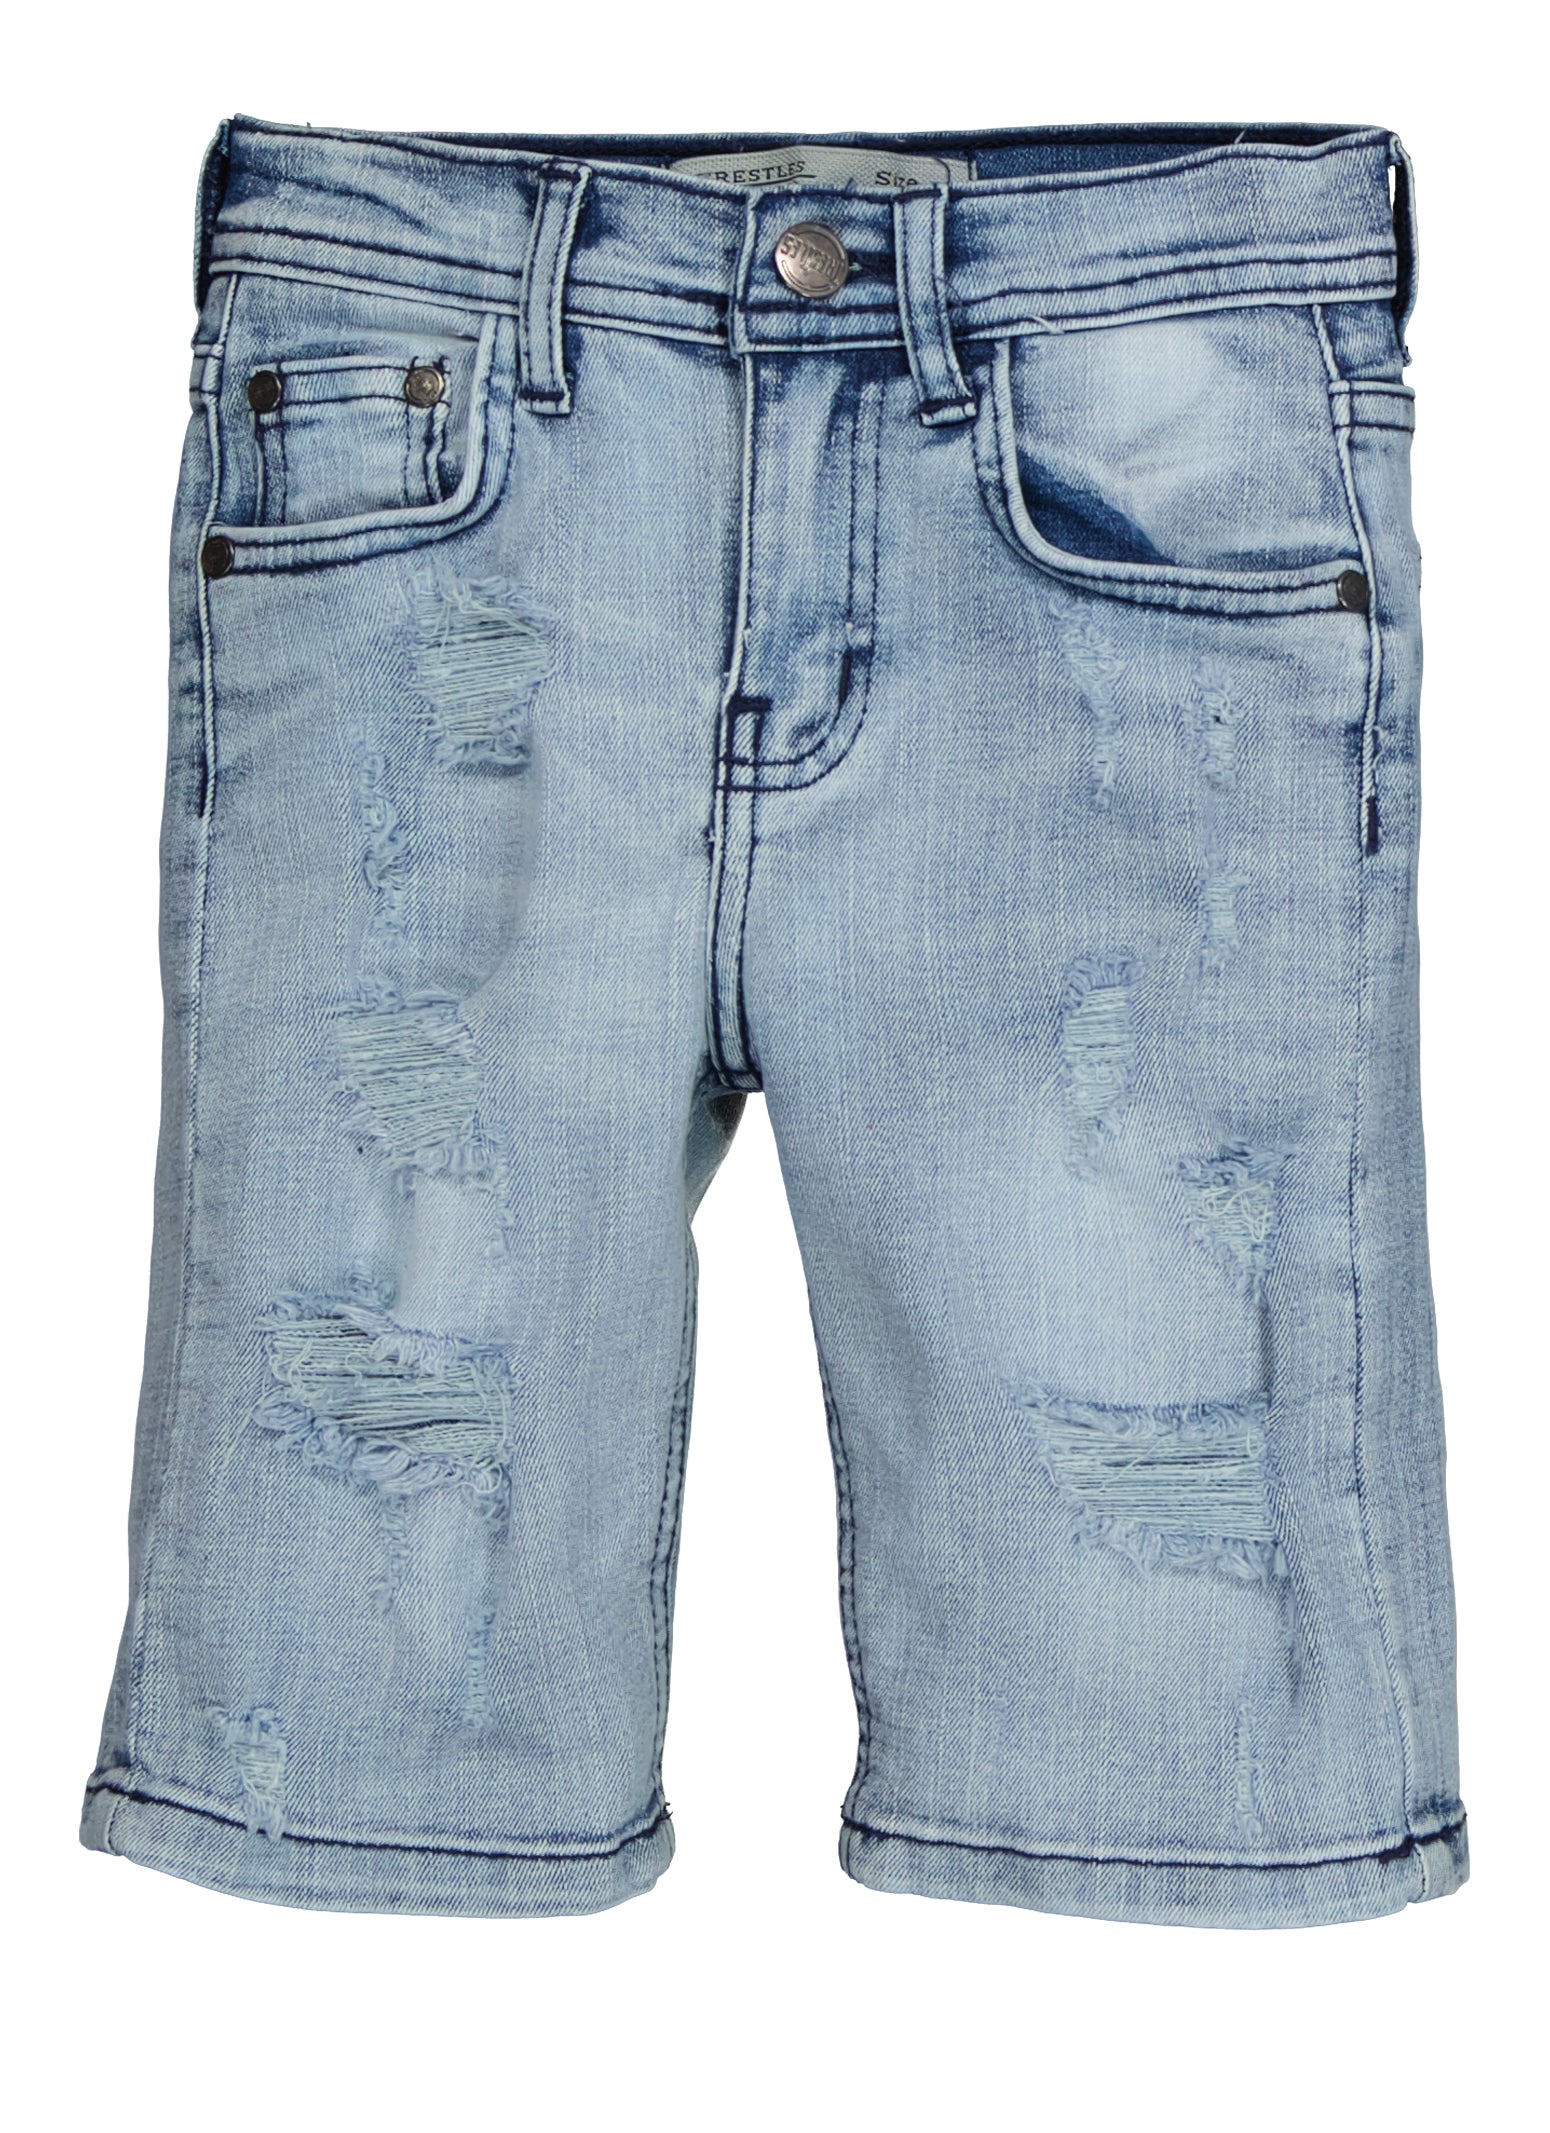 Little Boys Denim Distressed Bermuda Shorts, Blue, Size 7